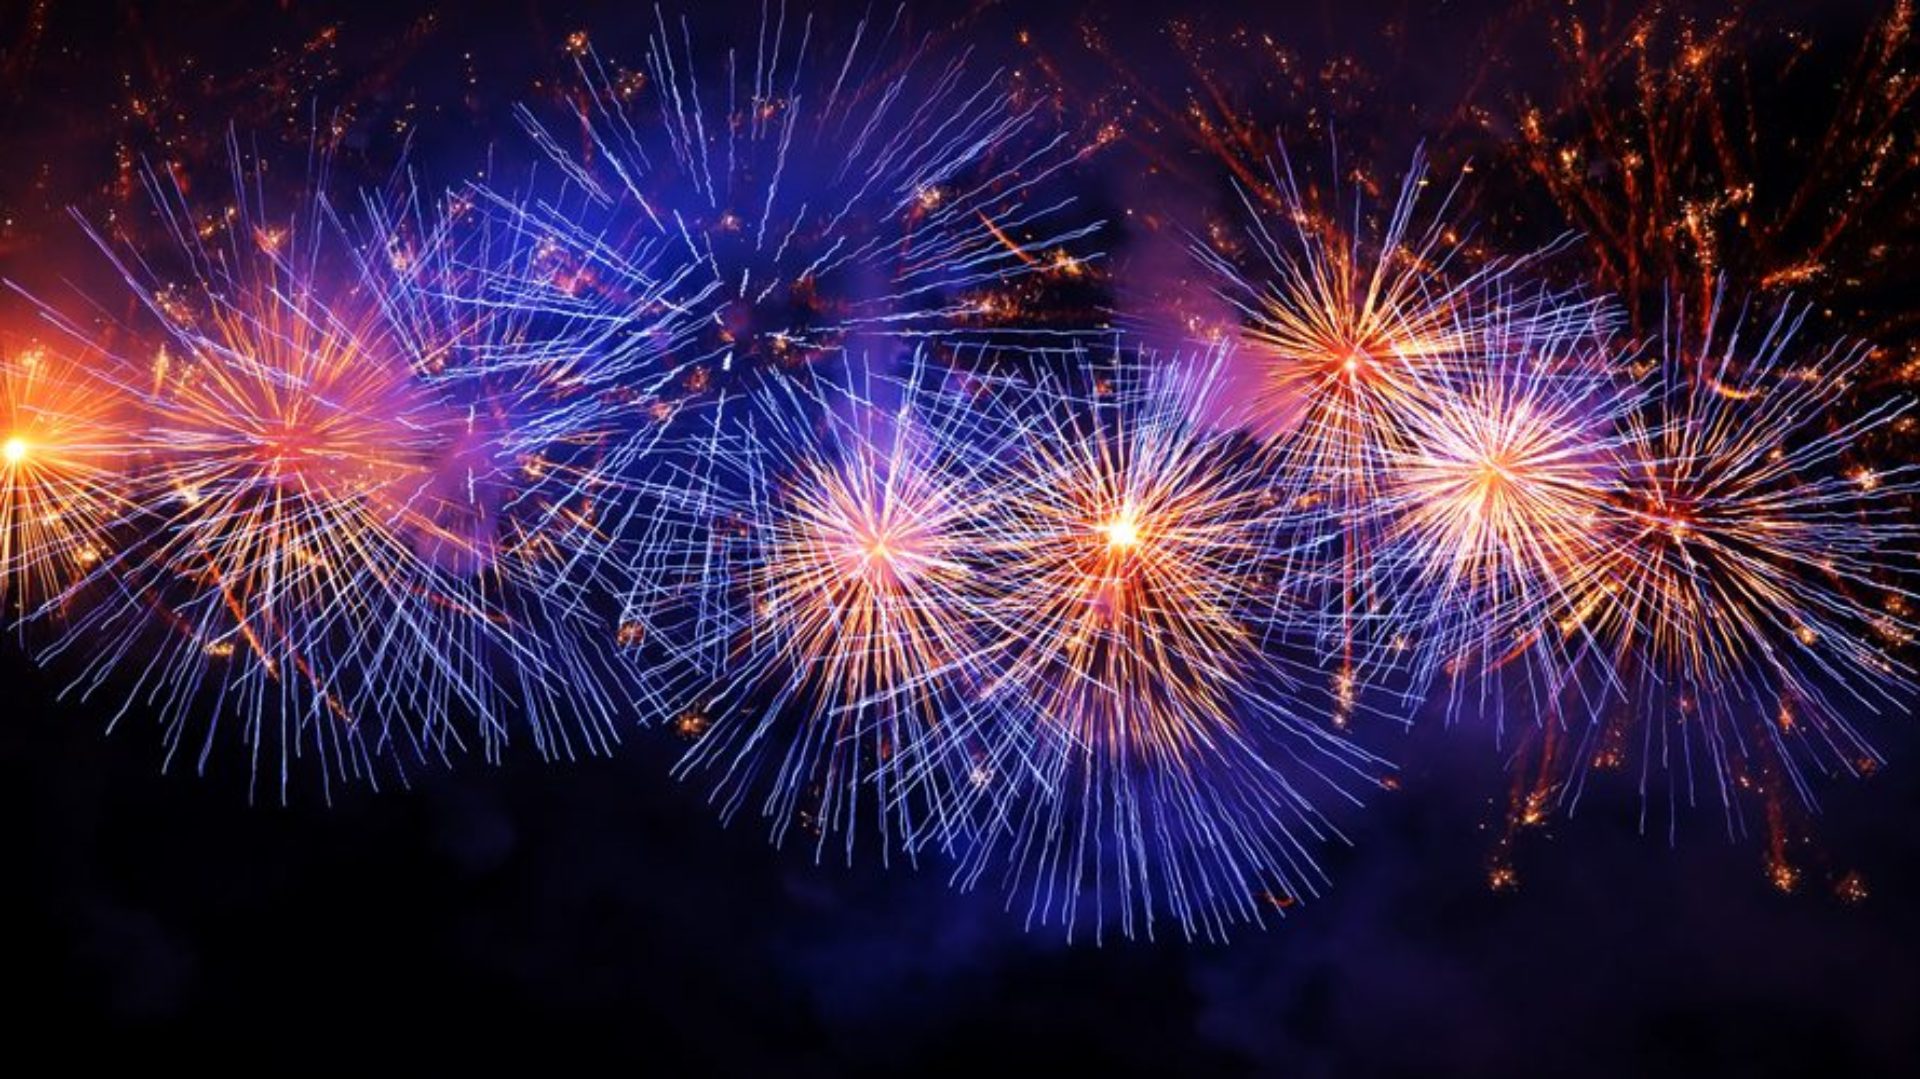 Caribbean Fireworks – Fireworks Show are Celebrations